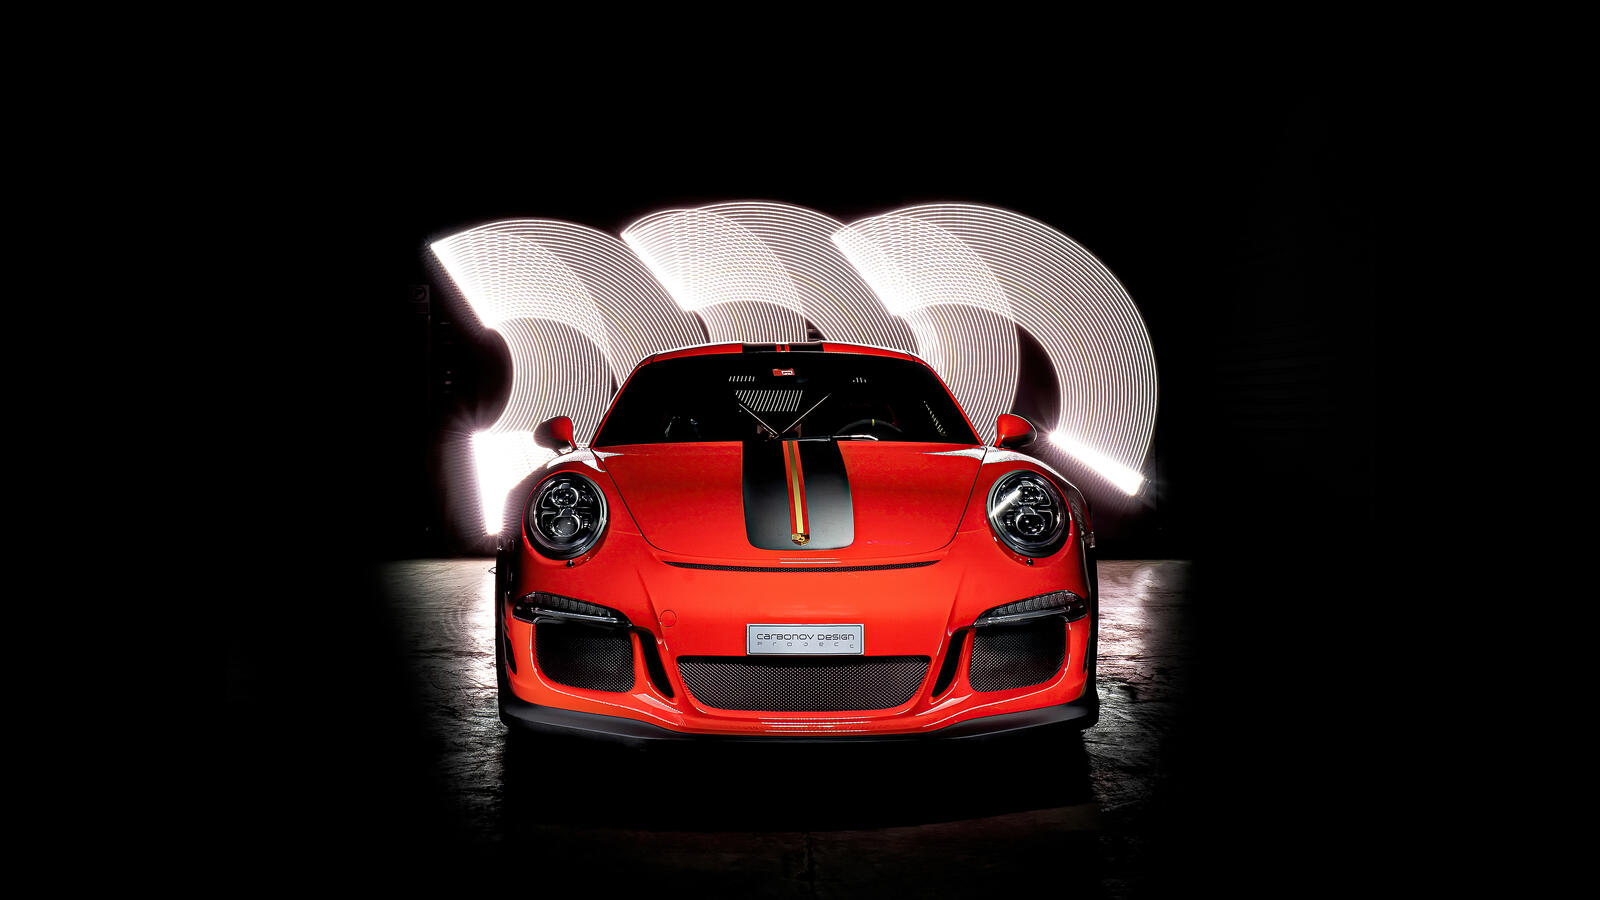 Wallpapers red car Porsche GT3 cars on the desktop